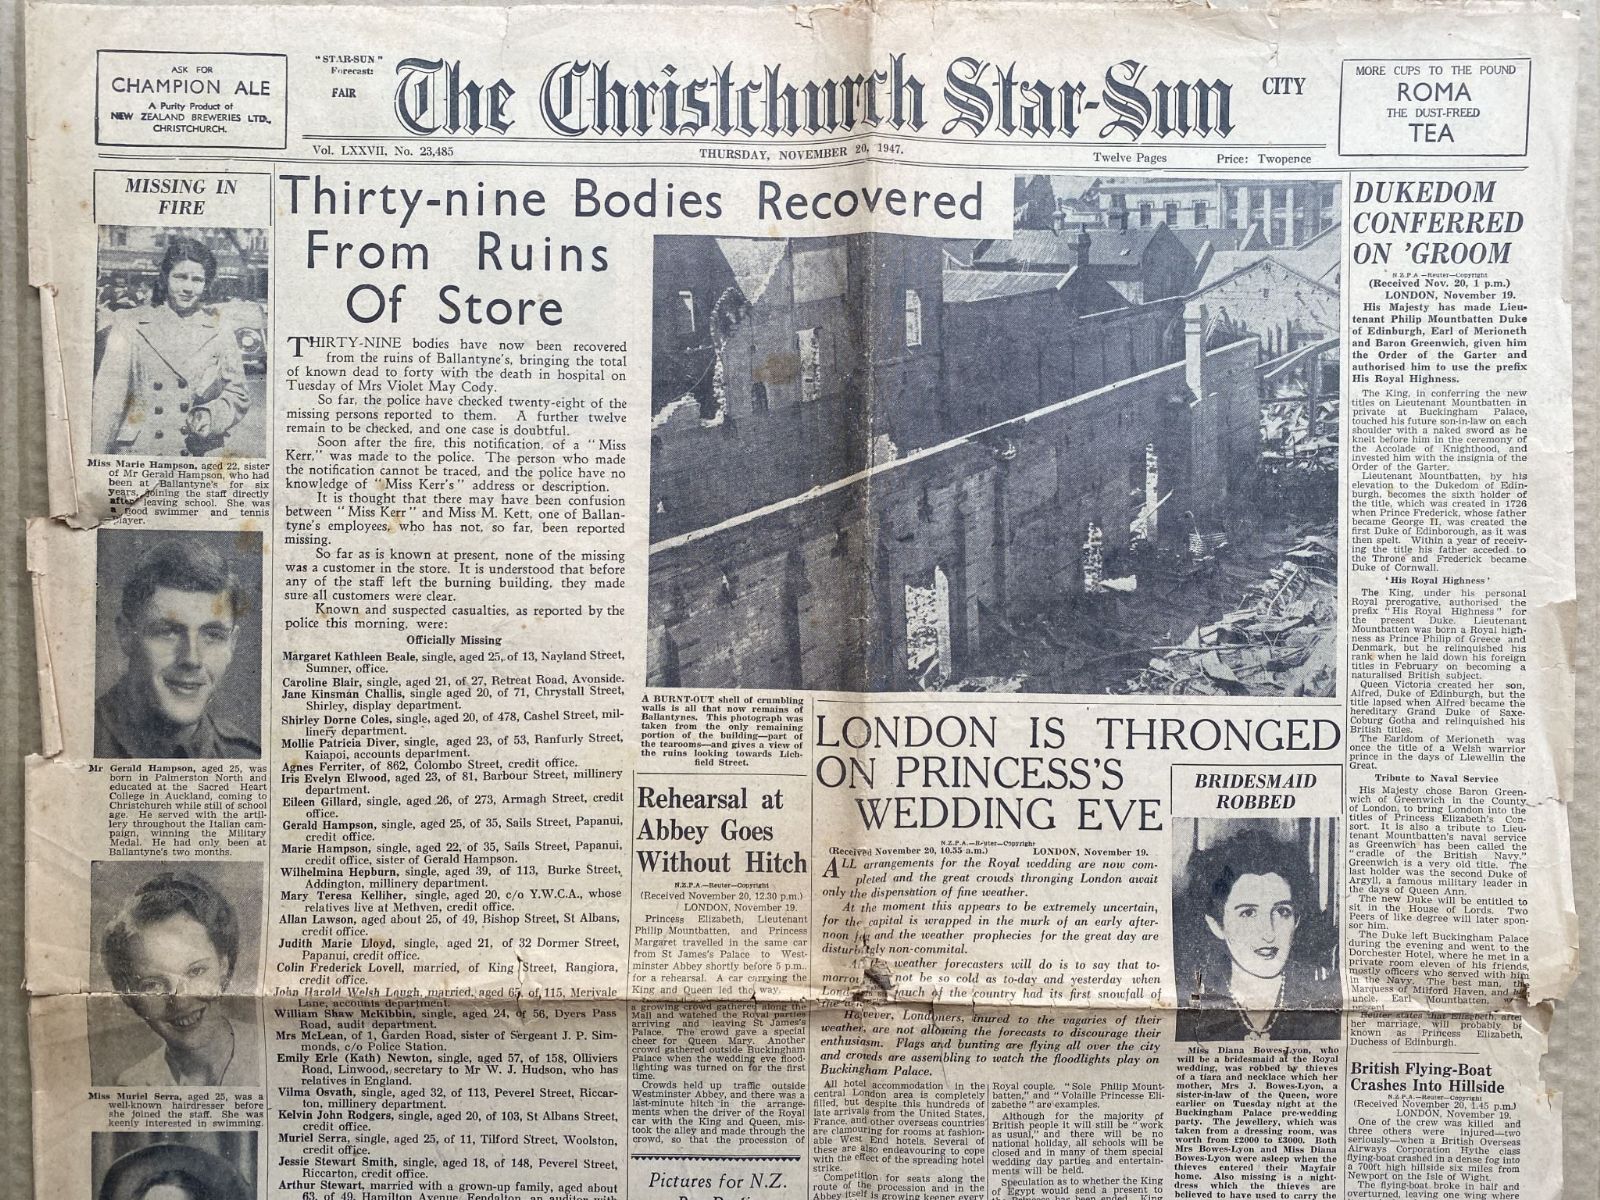 OLD NEWSPAPER: The Christchurch Star-Sun, 20 November 1947